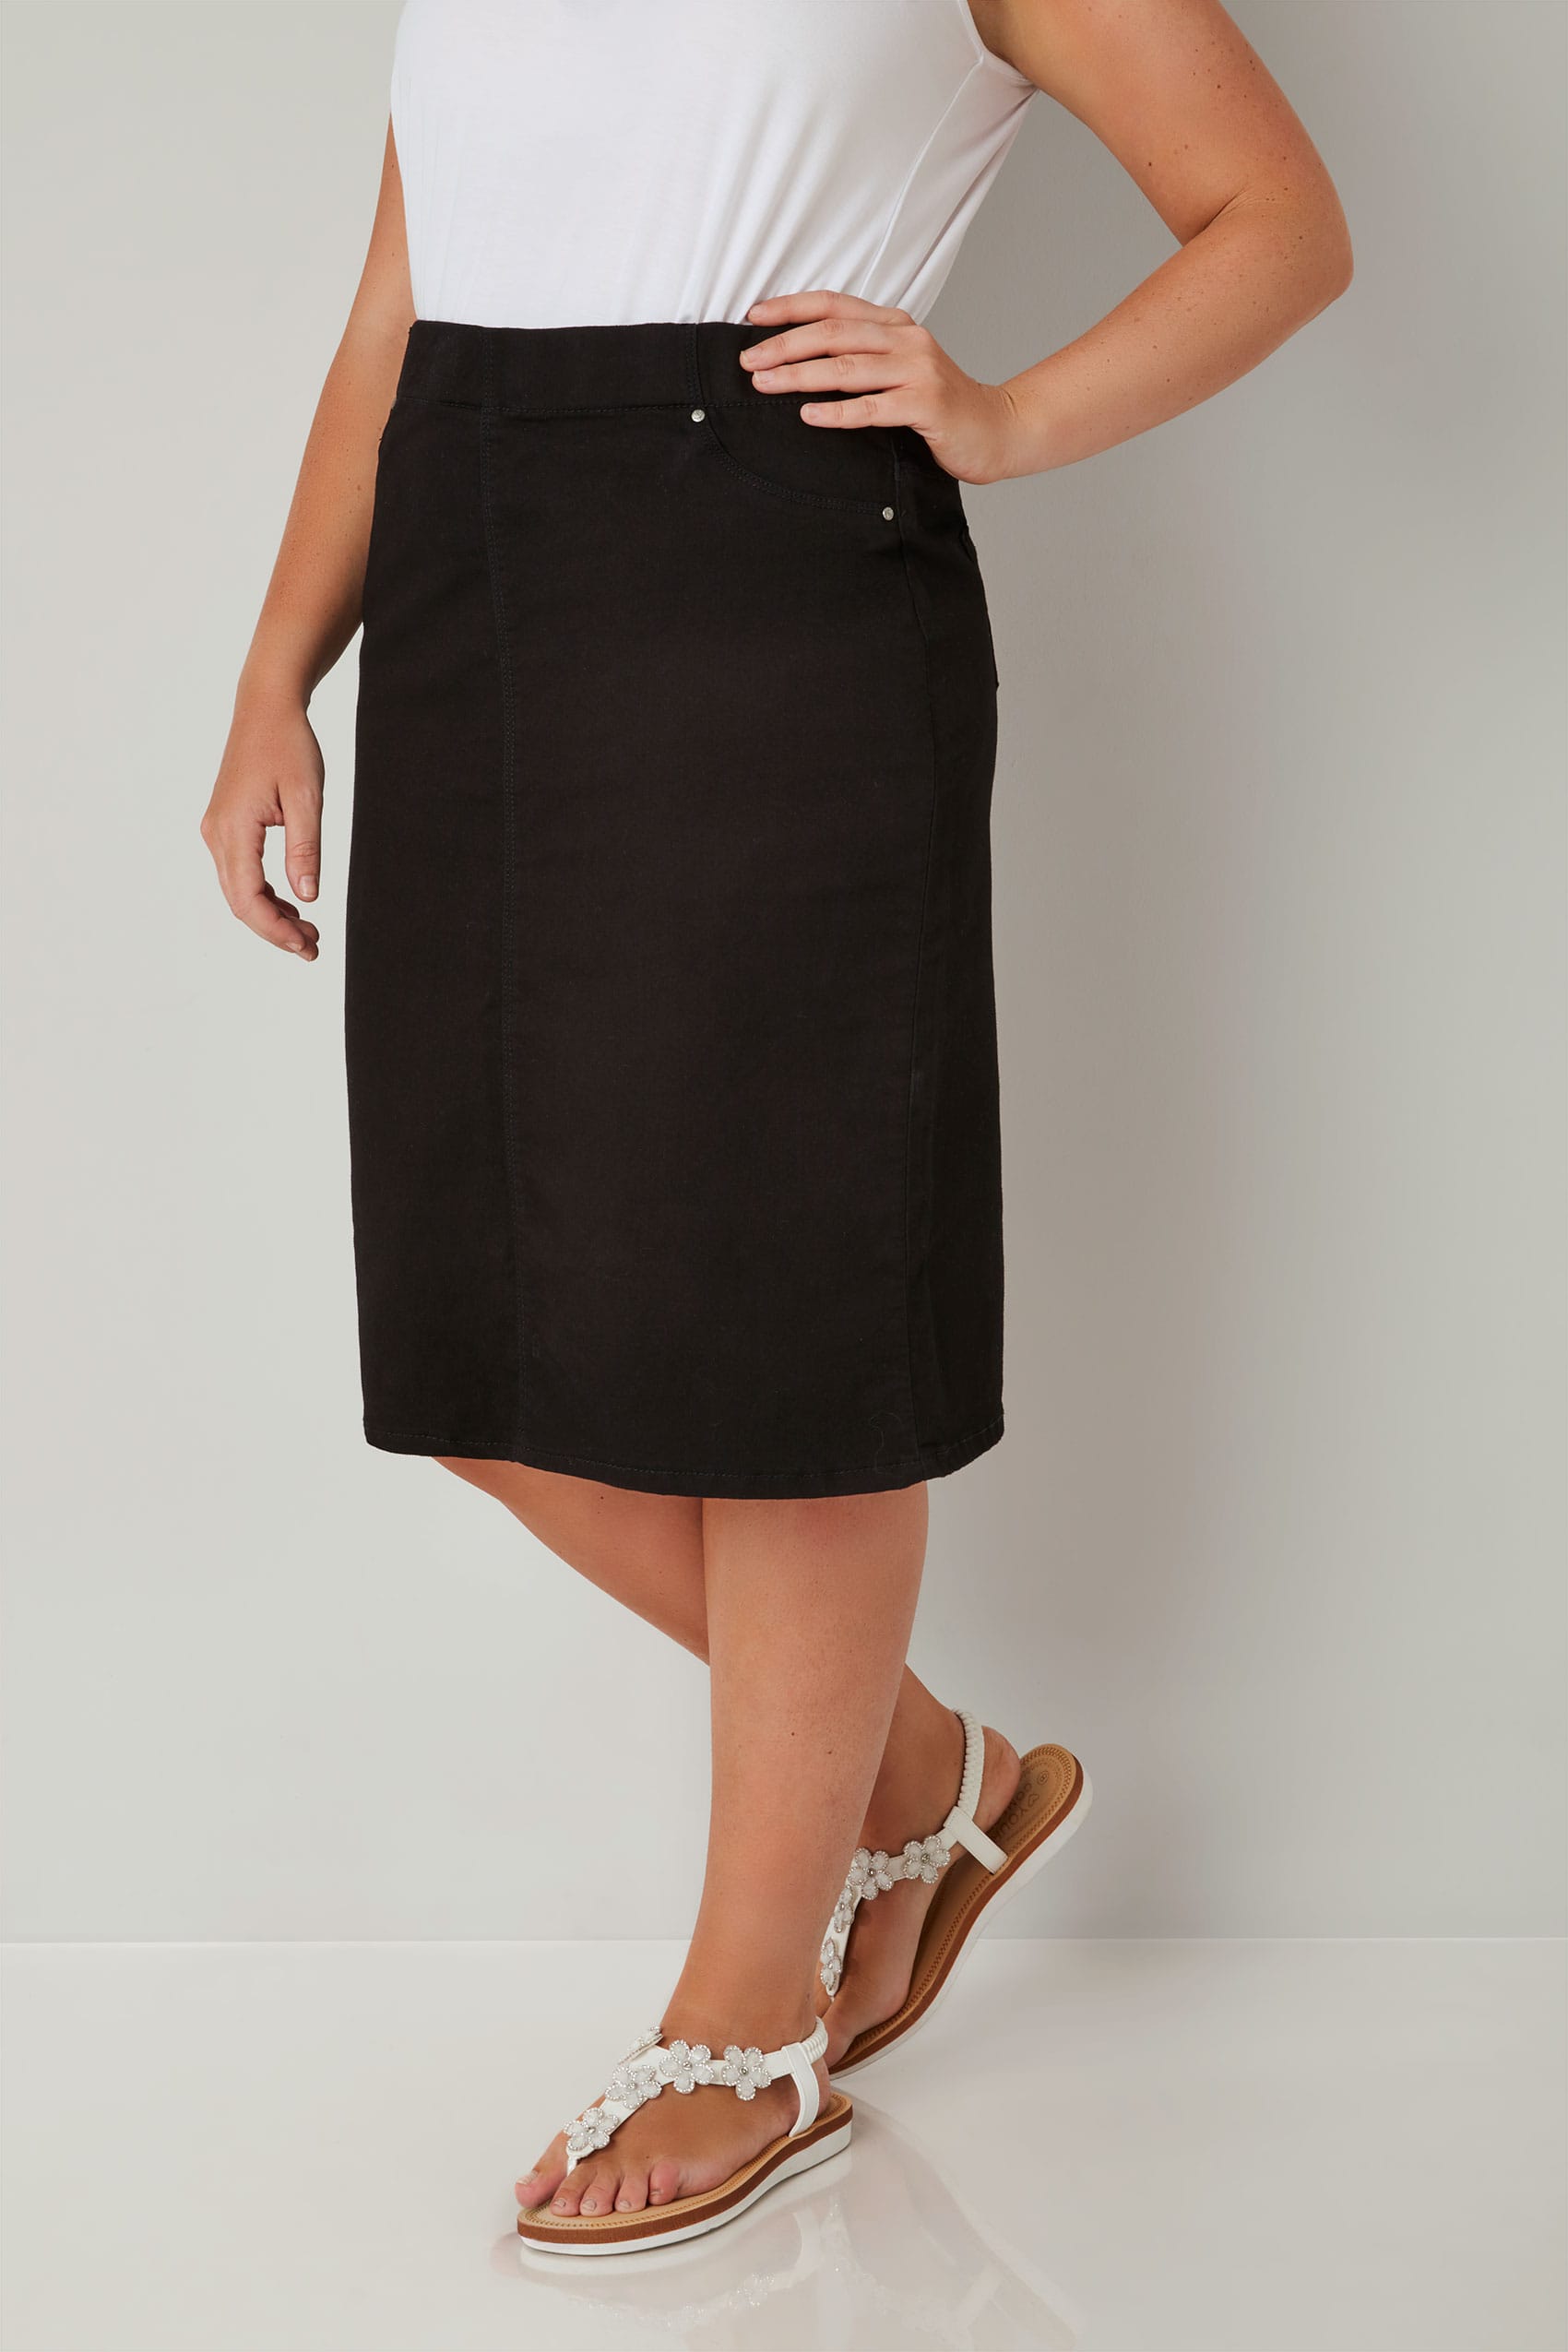 Black Denim Pencil Skirt Plus Size 16 To 36